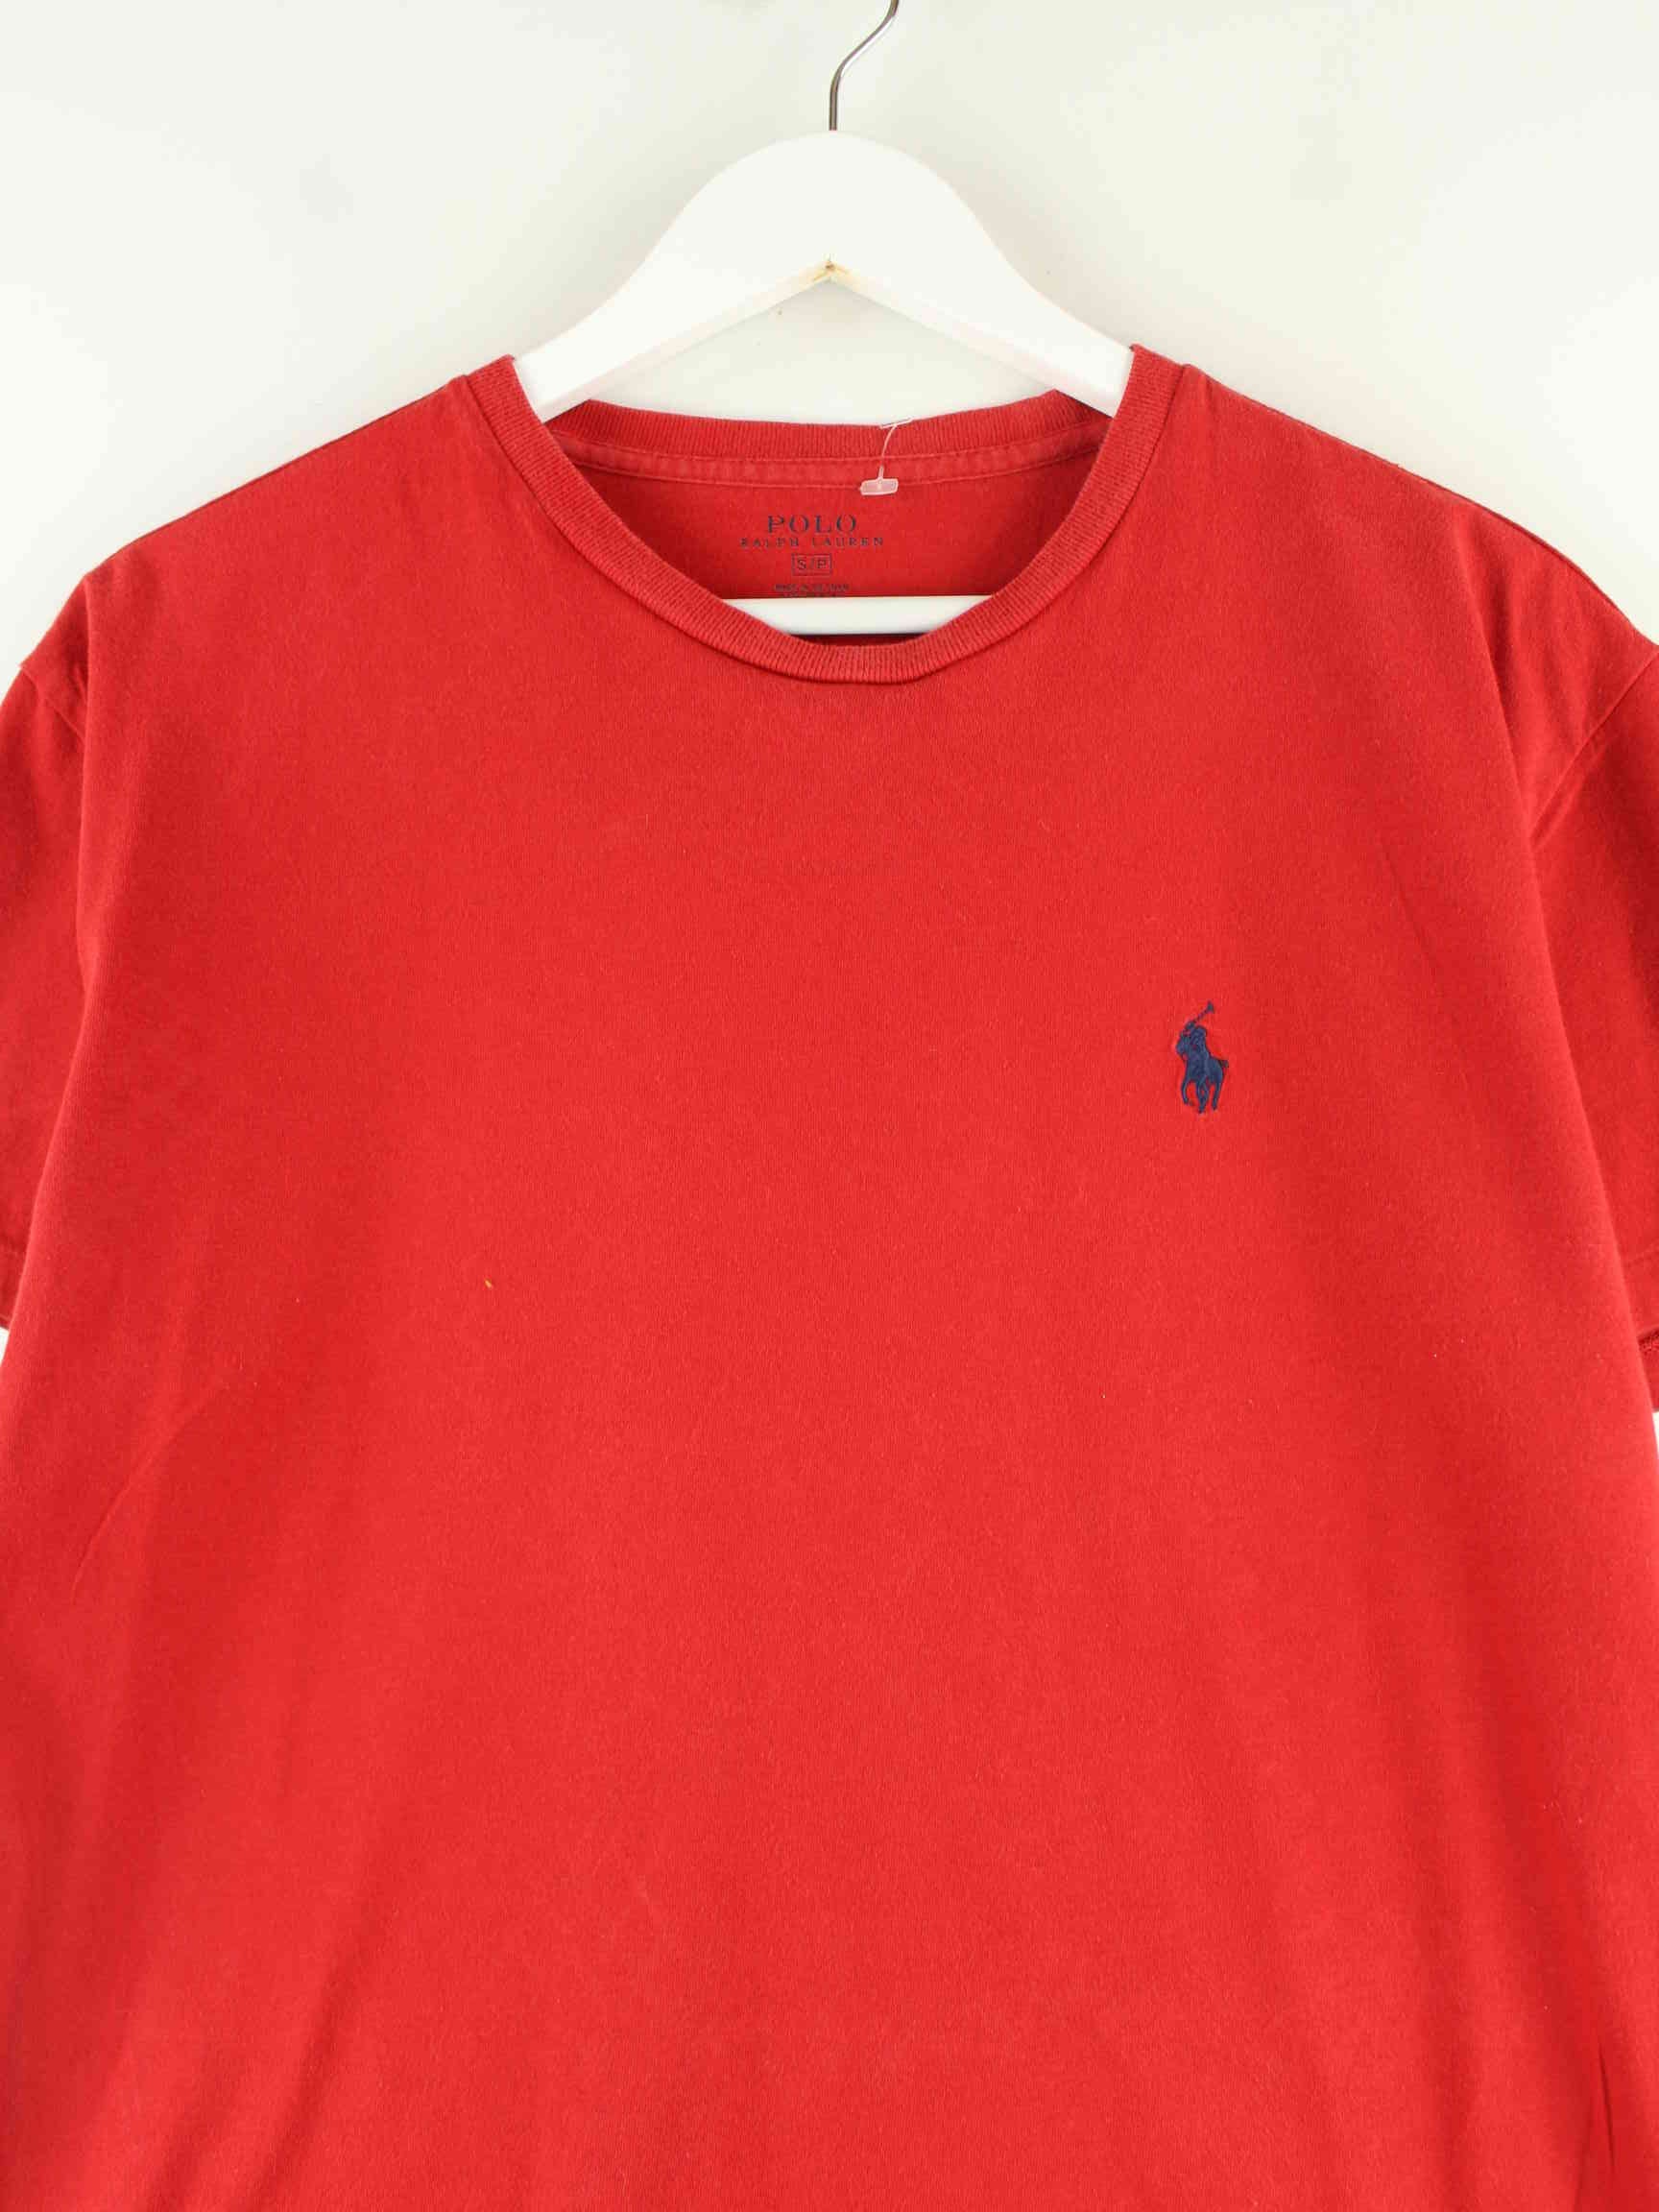 Ralph Lauren Basic T-Shirt Rot S (detail image 1)